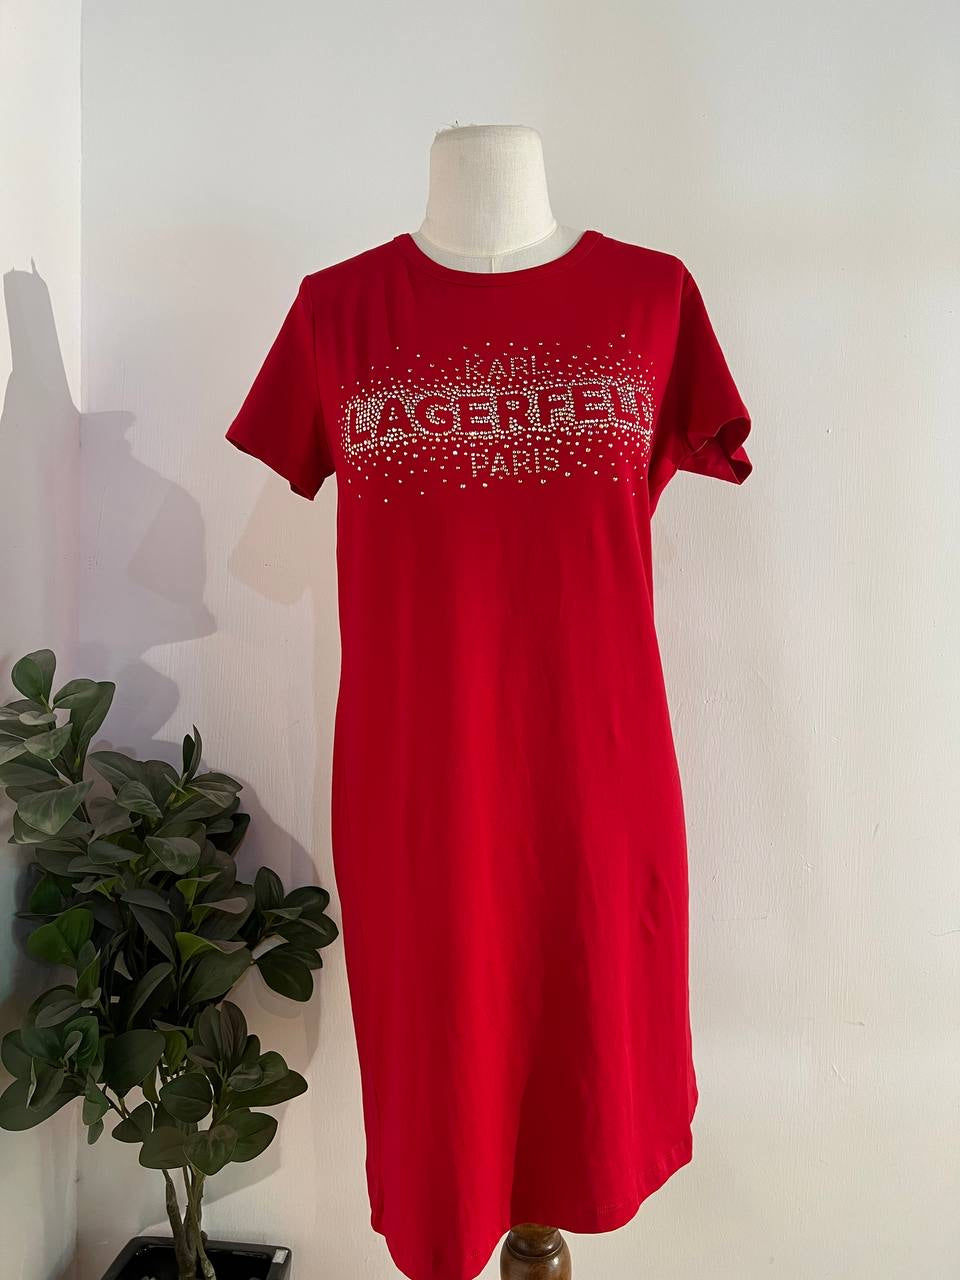 Karl Lagerfeld dress shirt